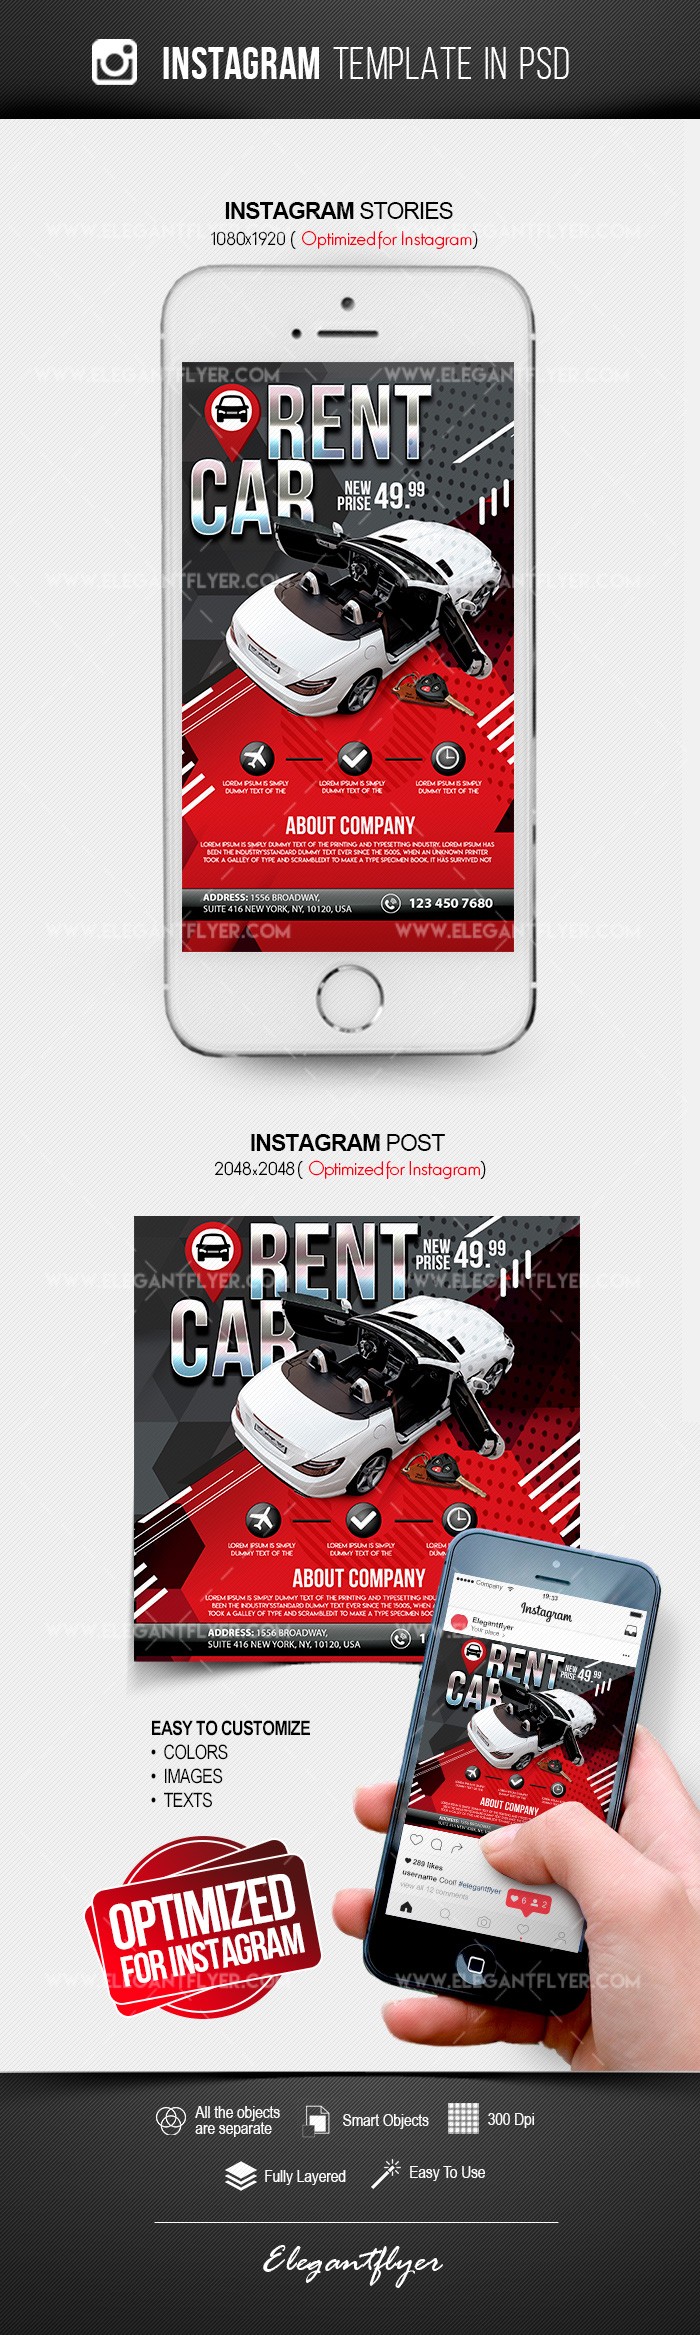 Rent a Car Instagram by ElegantFlyer